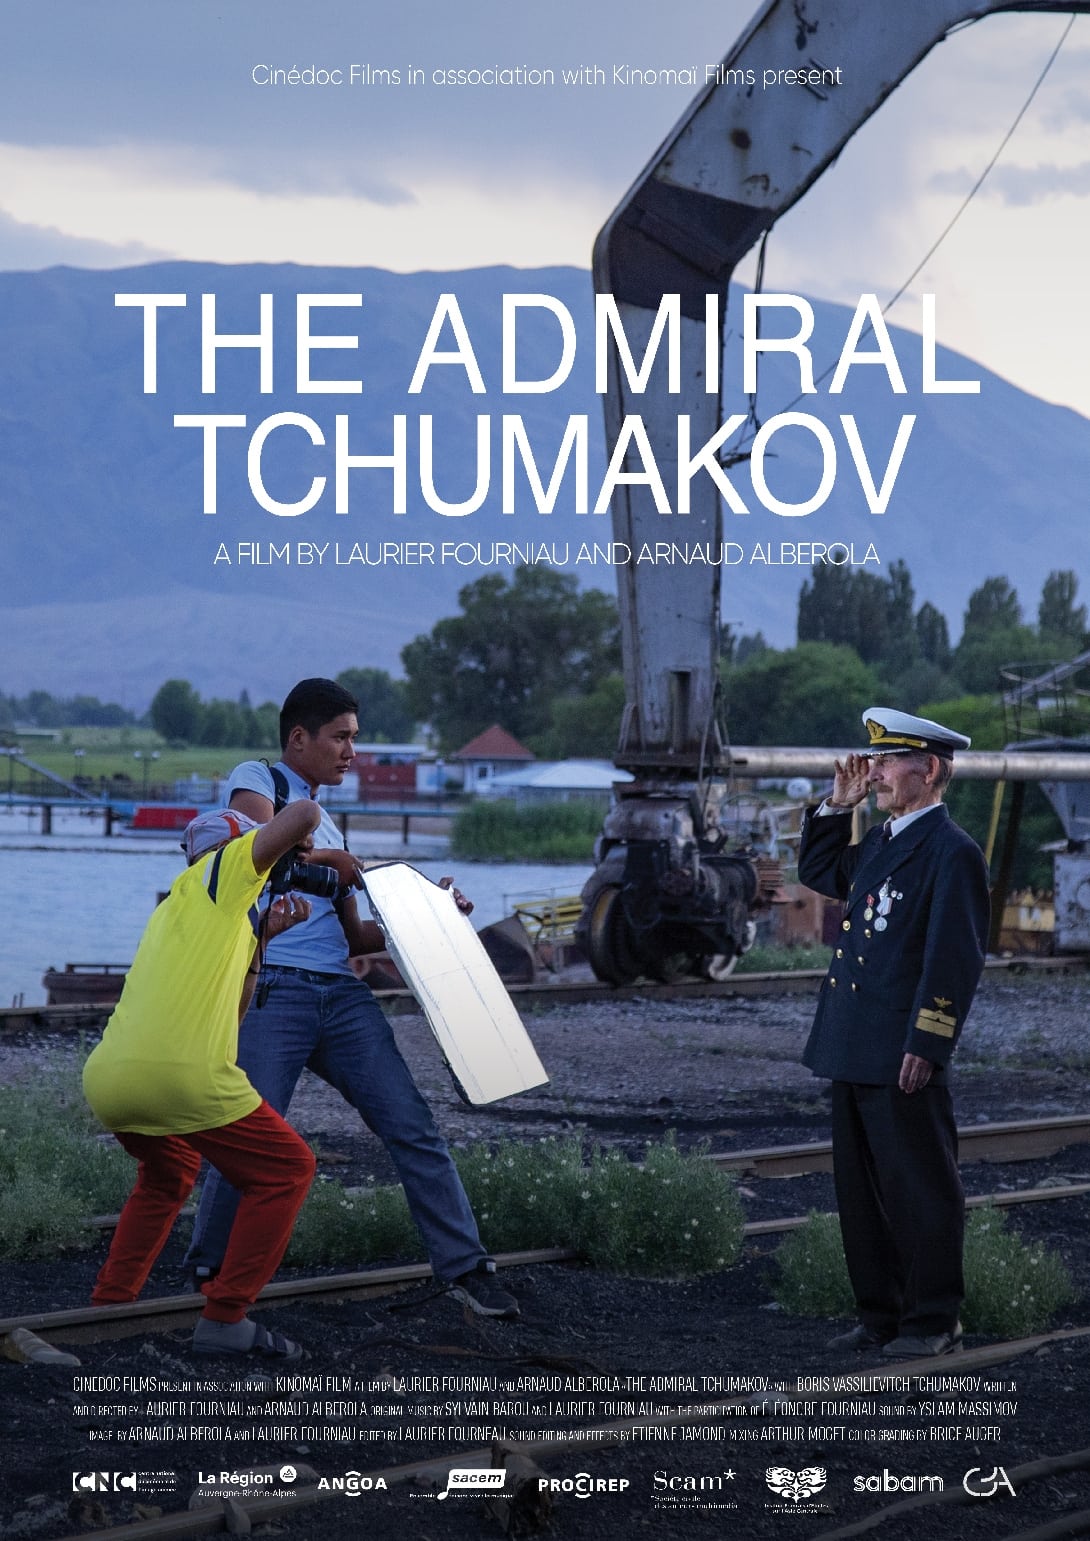 The Admiral Tchumakov